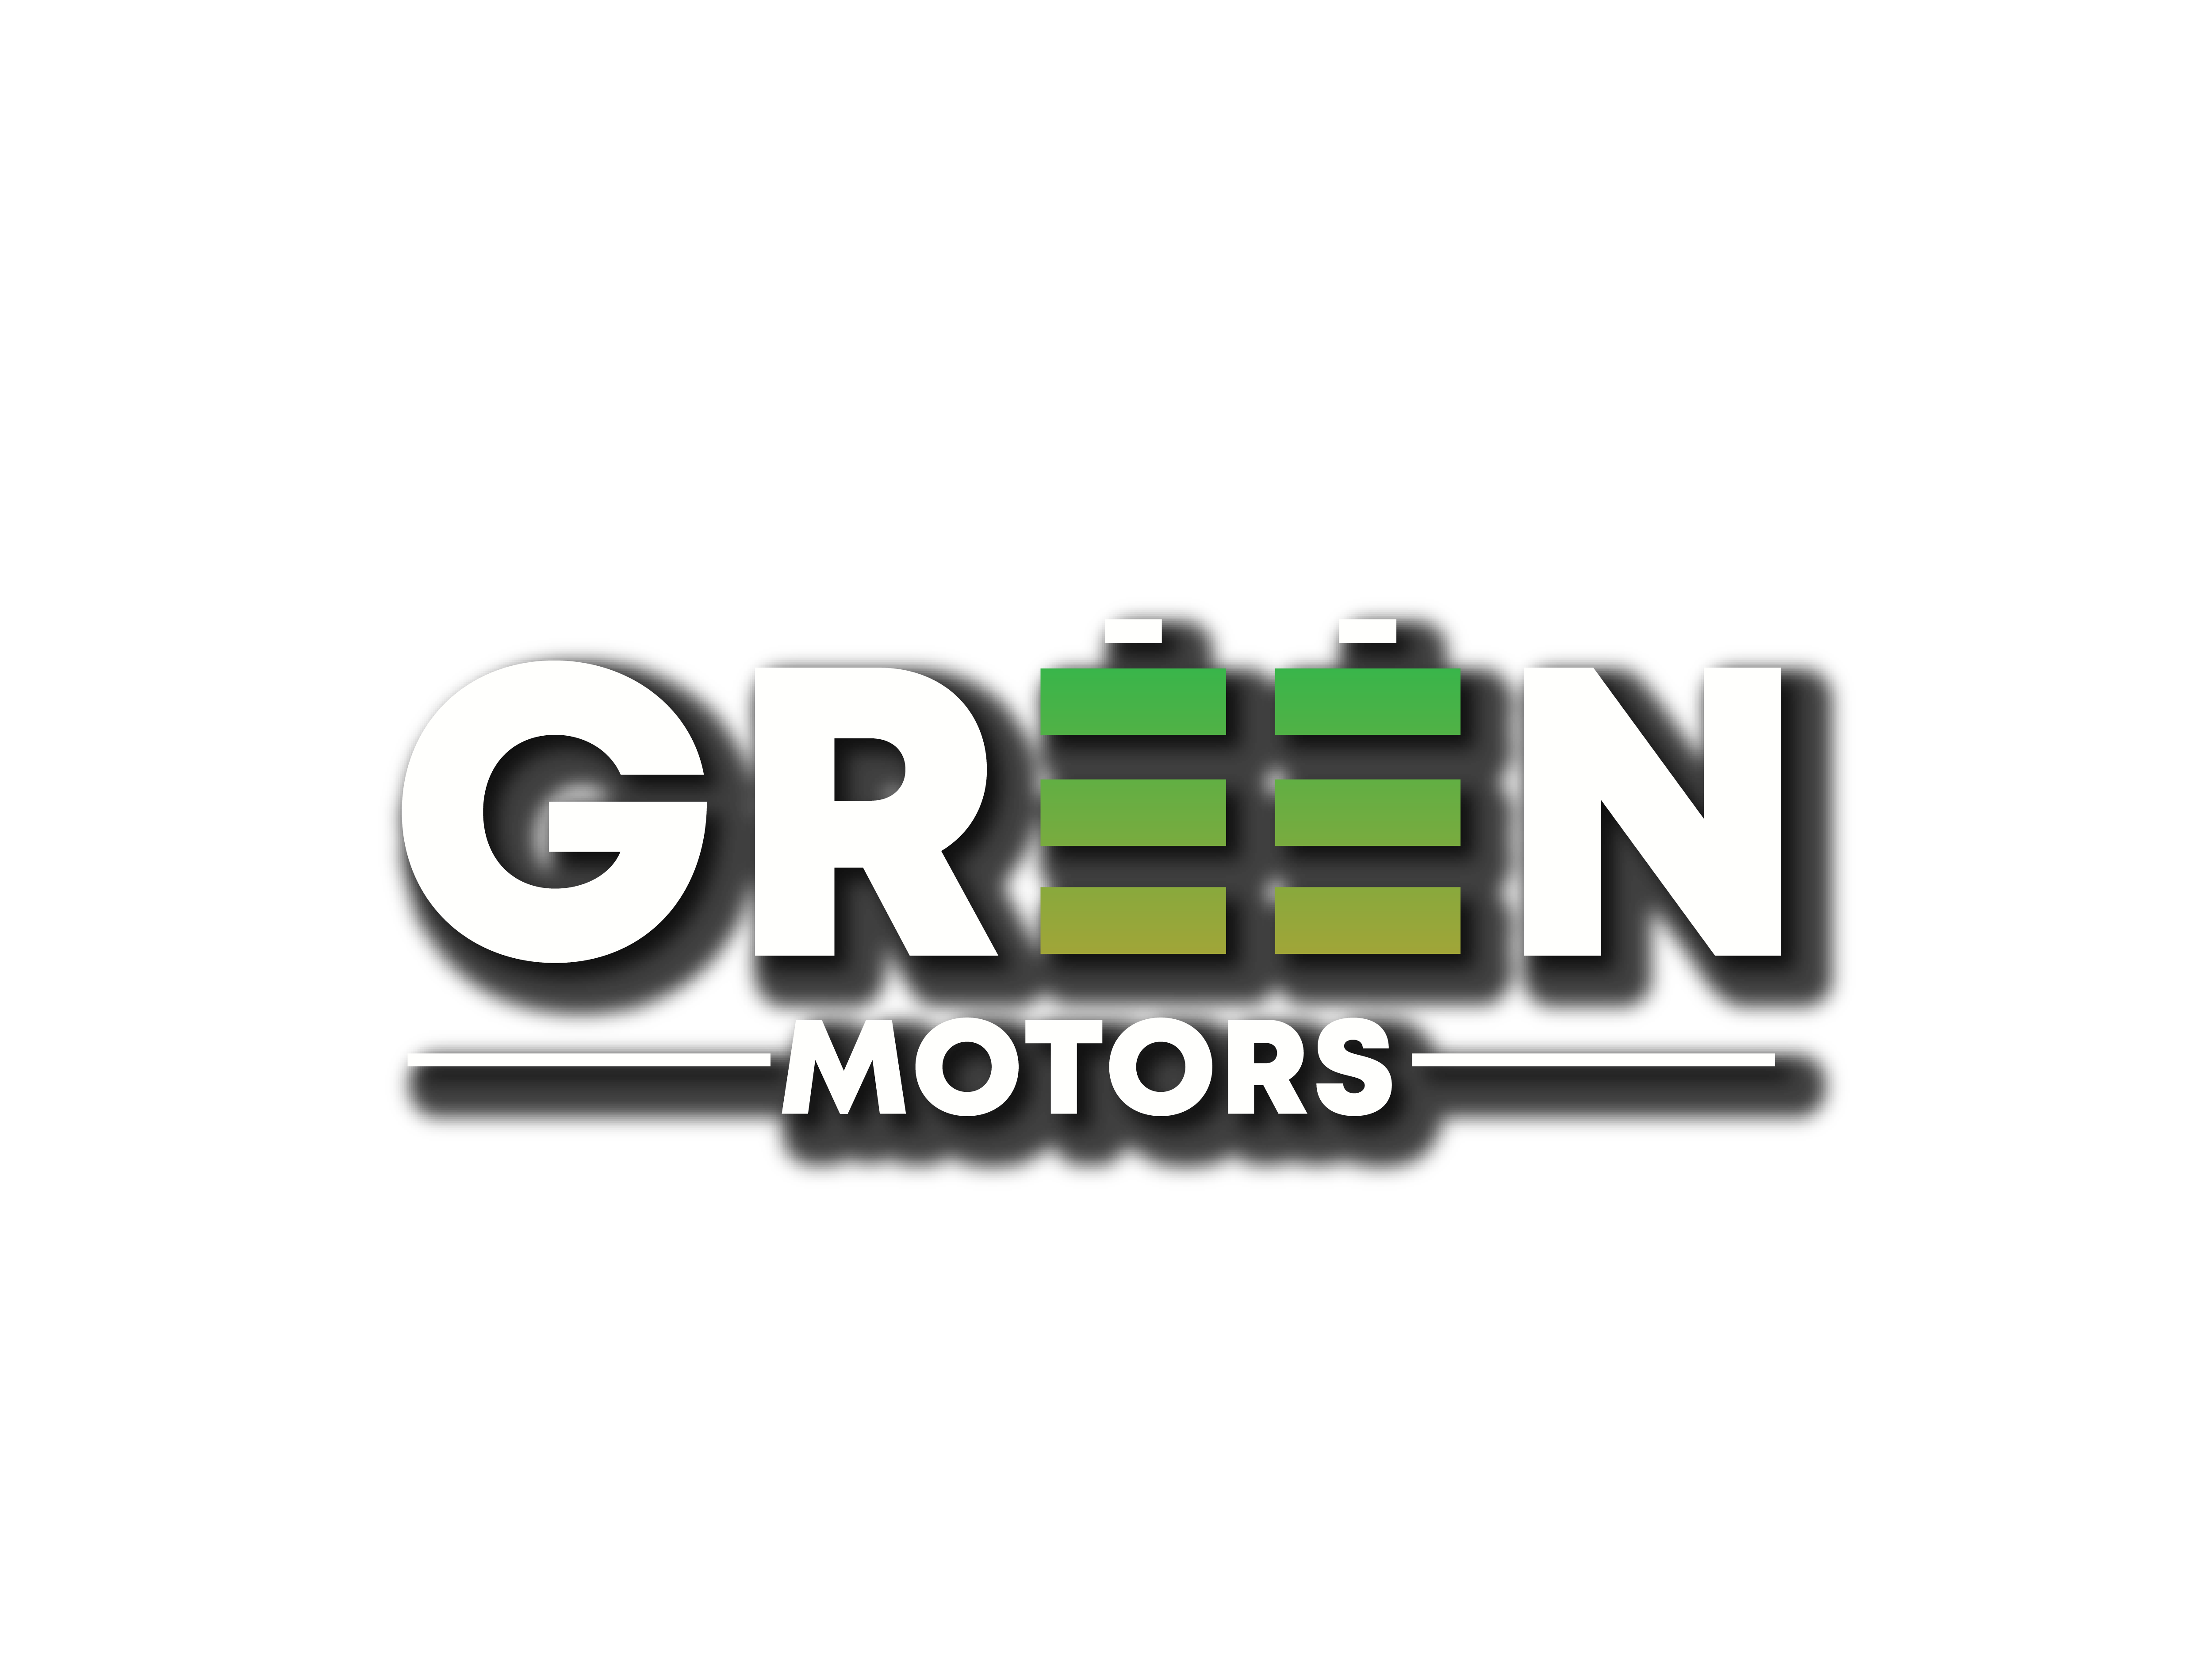 Electric Vehicle GREEN MOTORS